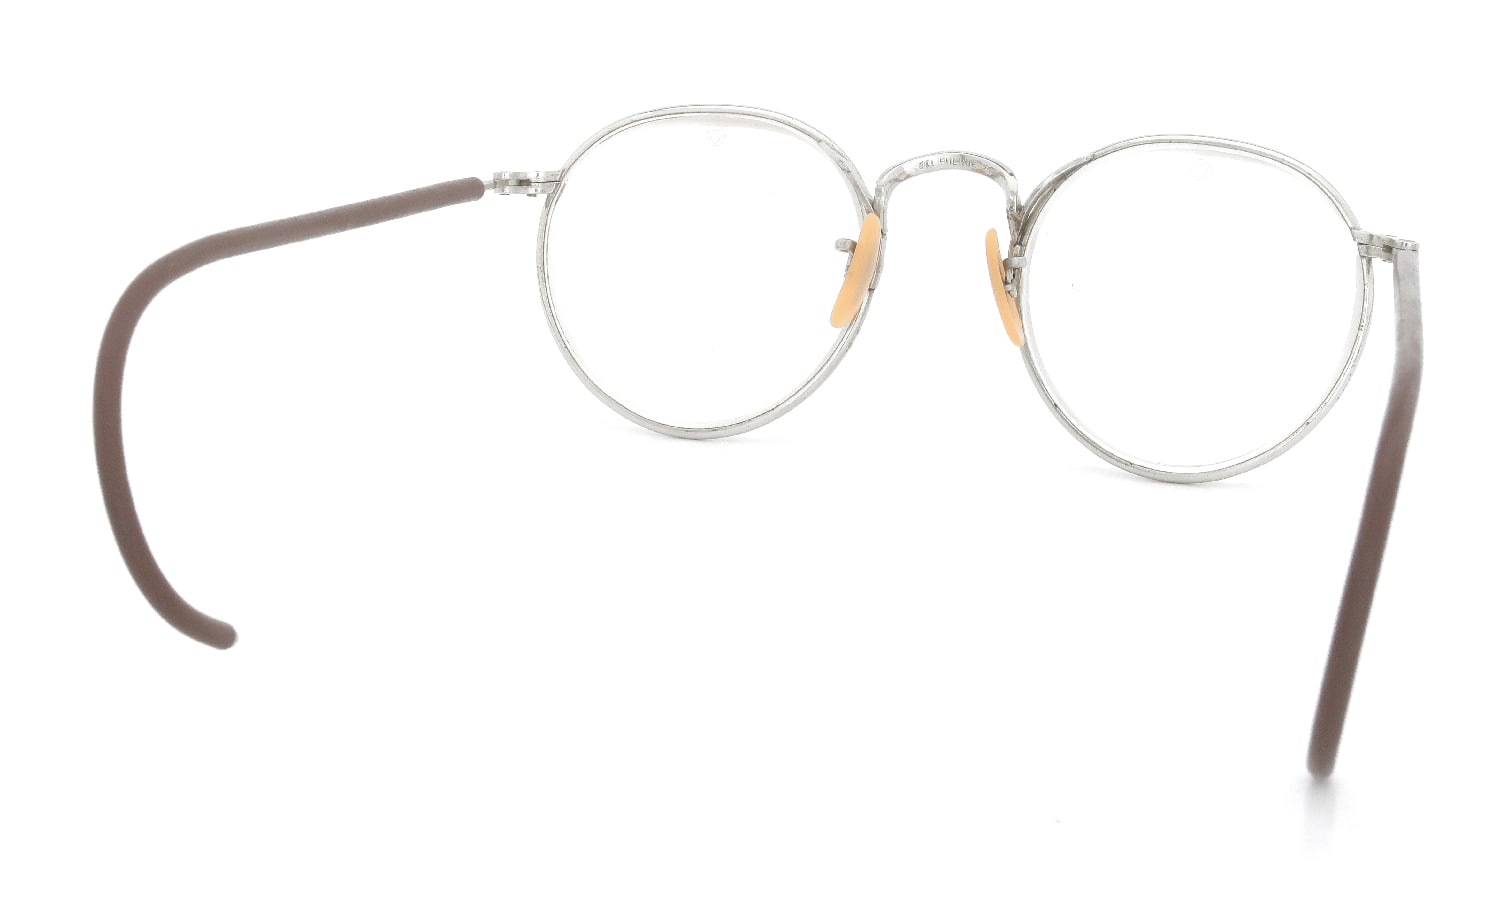 Bausch&Lomb safety-glasses 1950s-1960s Full-Frame Ful-VuePanto Silver Original-Glass-Lens 42-21